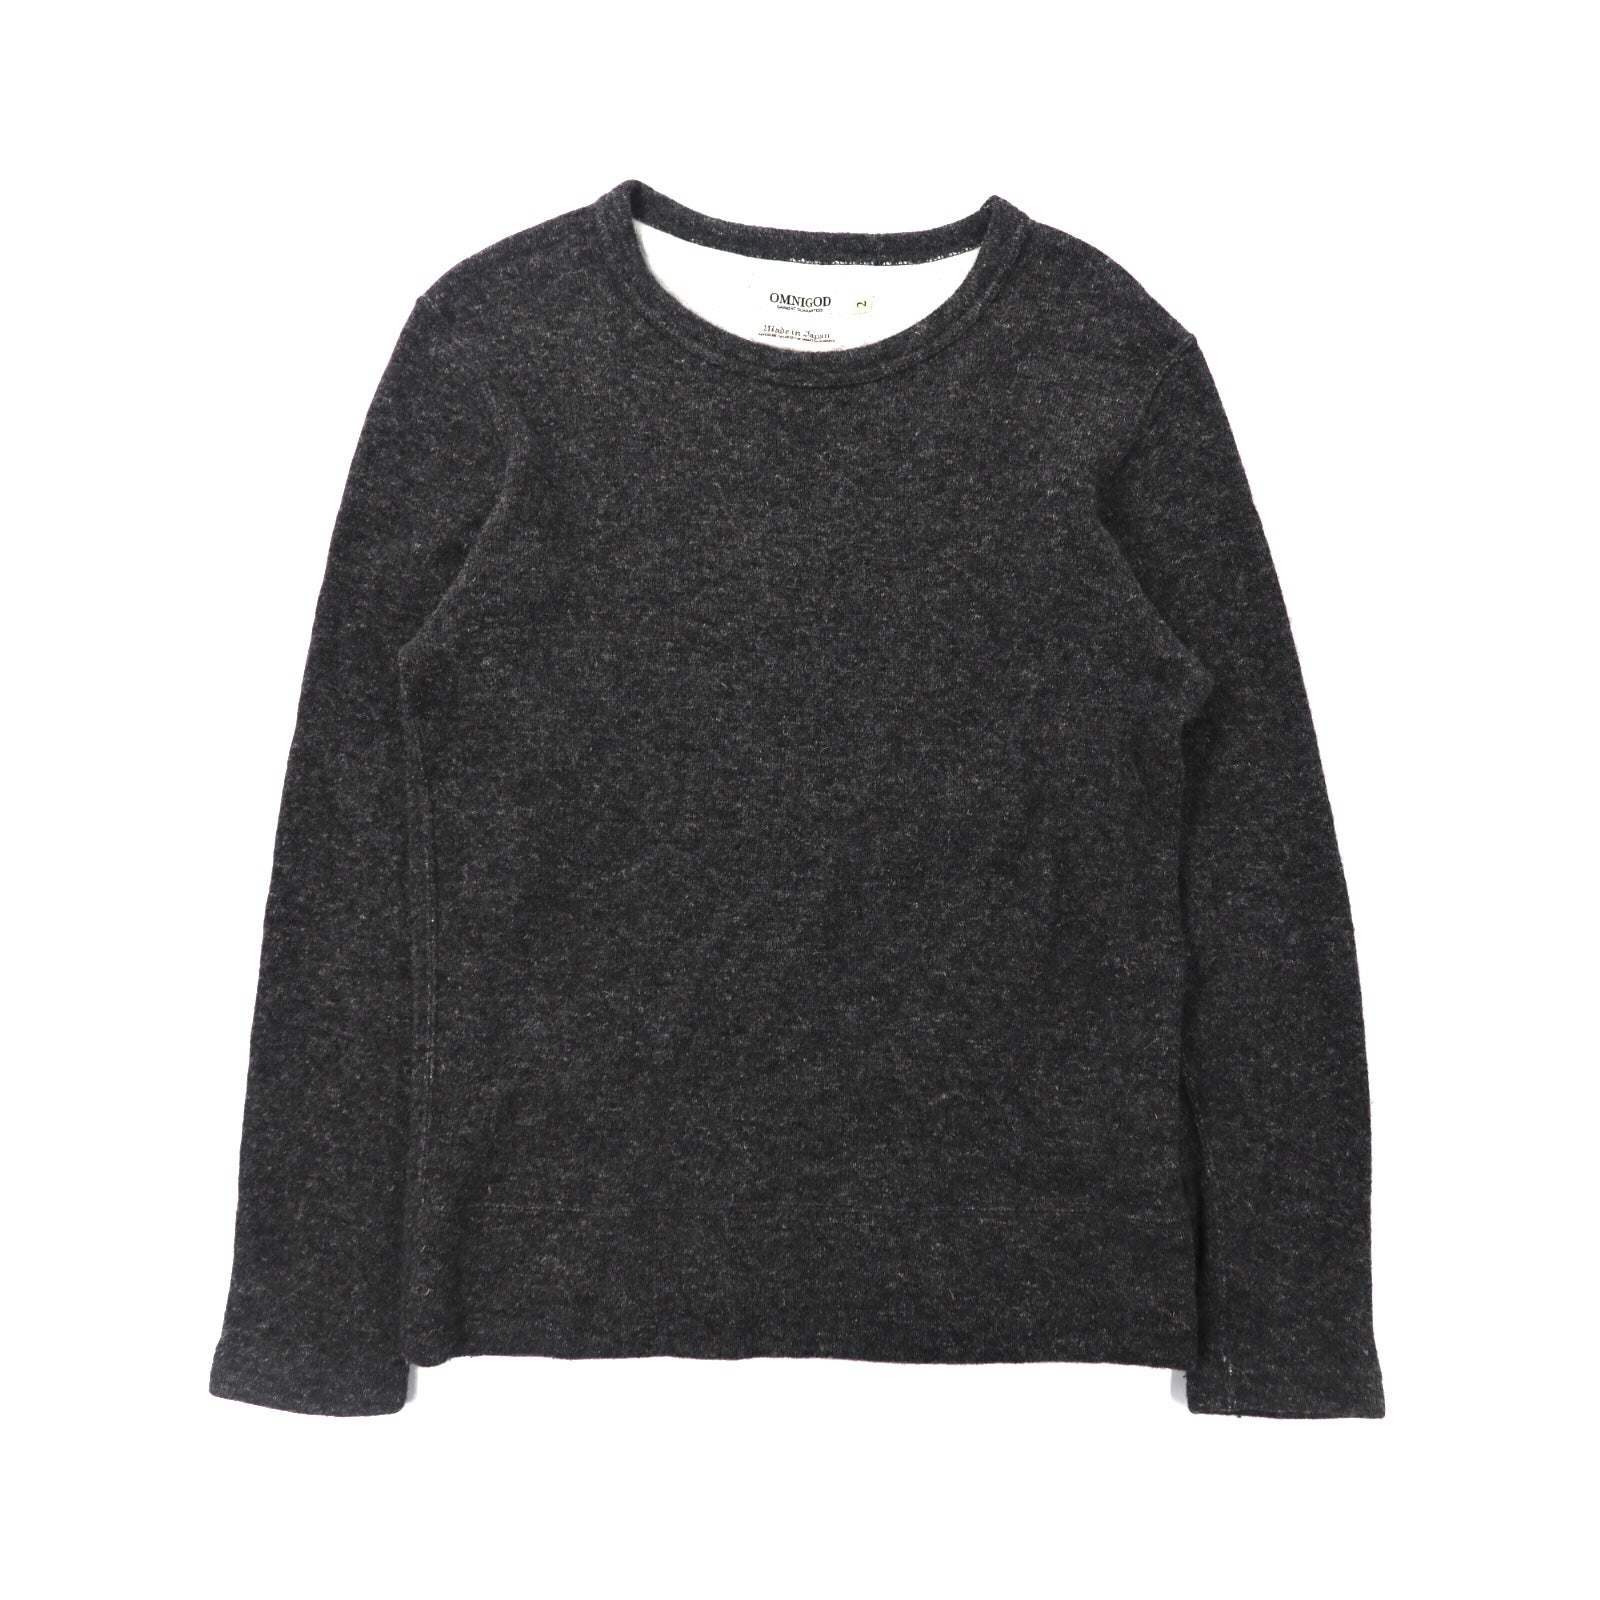 Omnigod knit sweater 2 Gray Wool Japan MADE